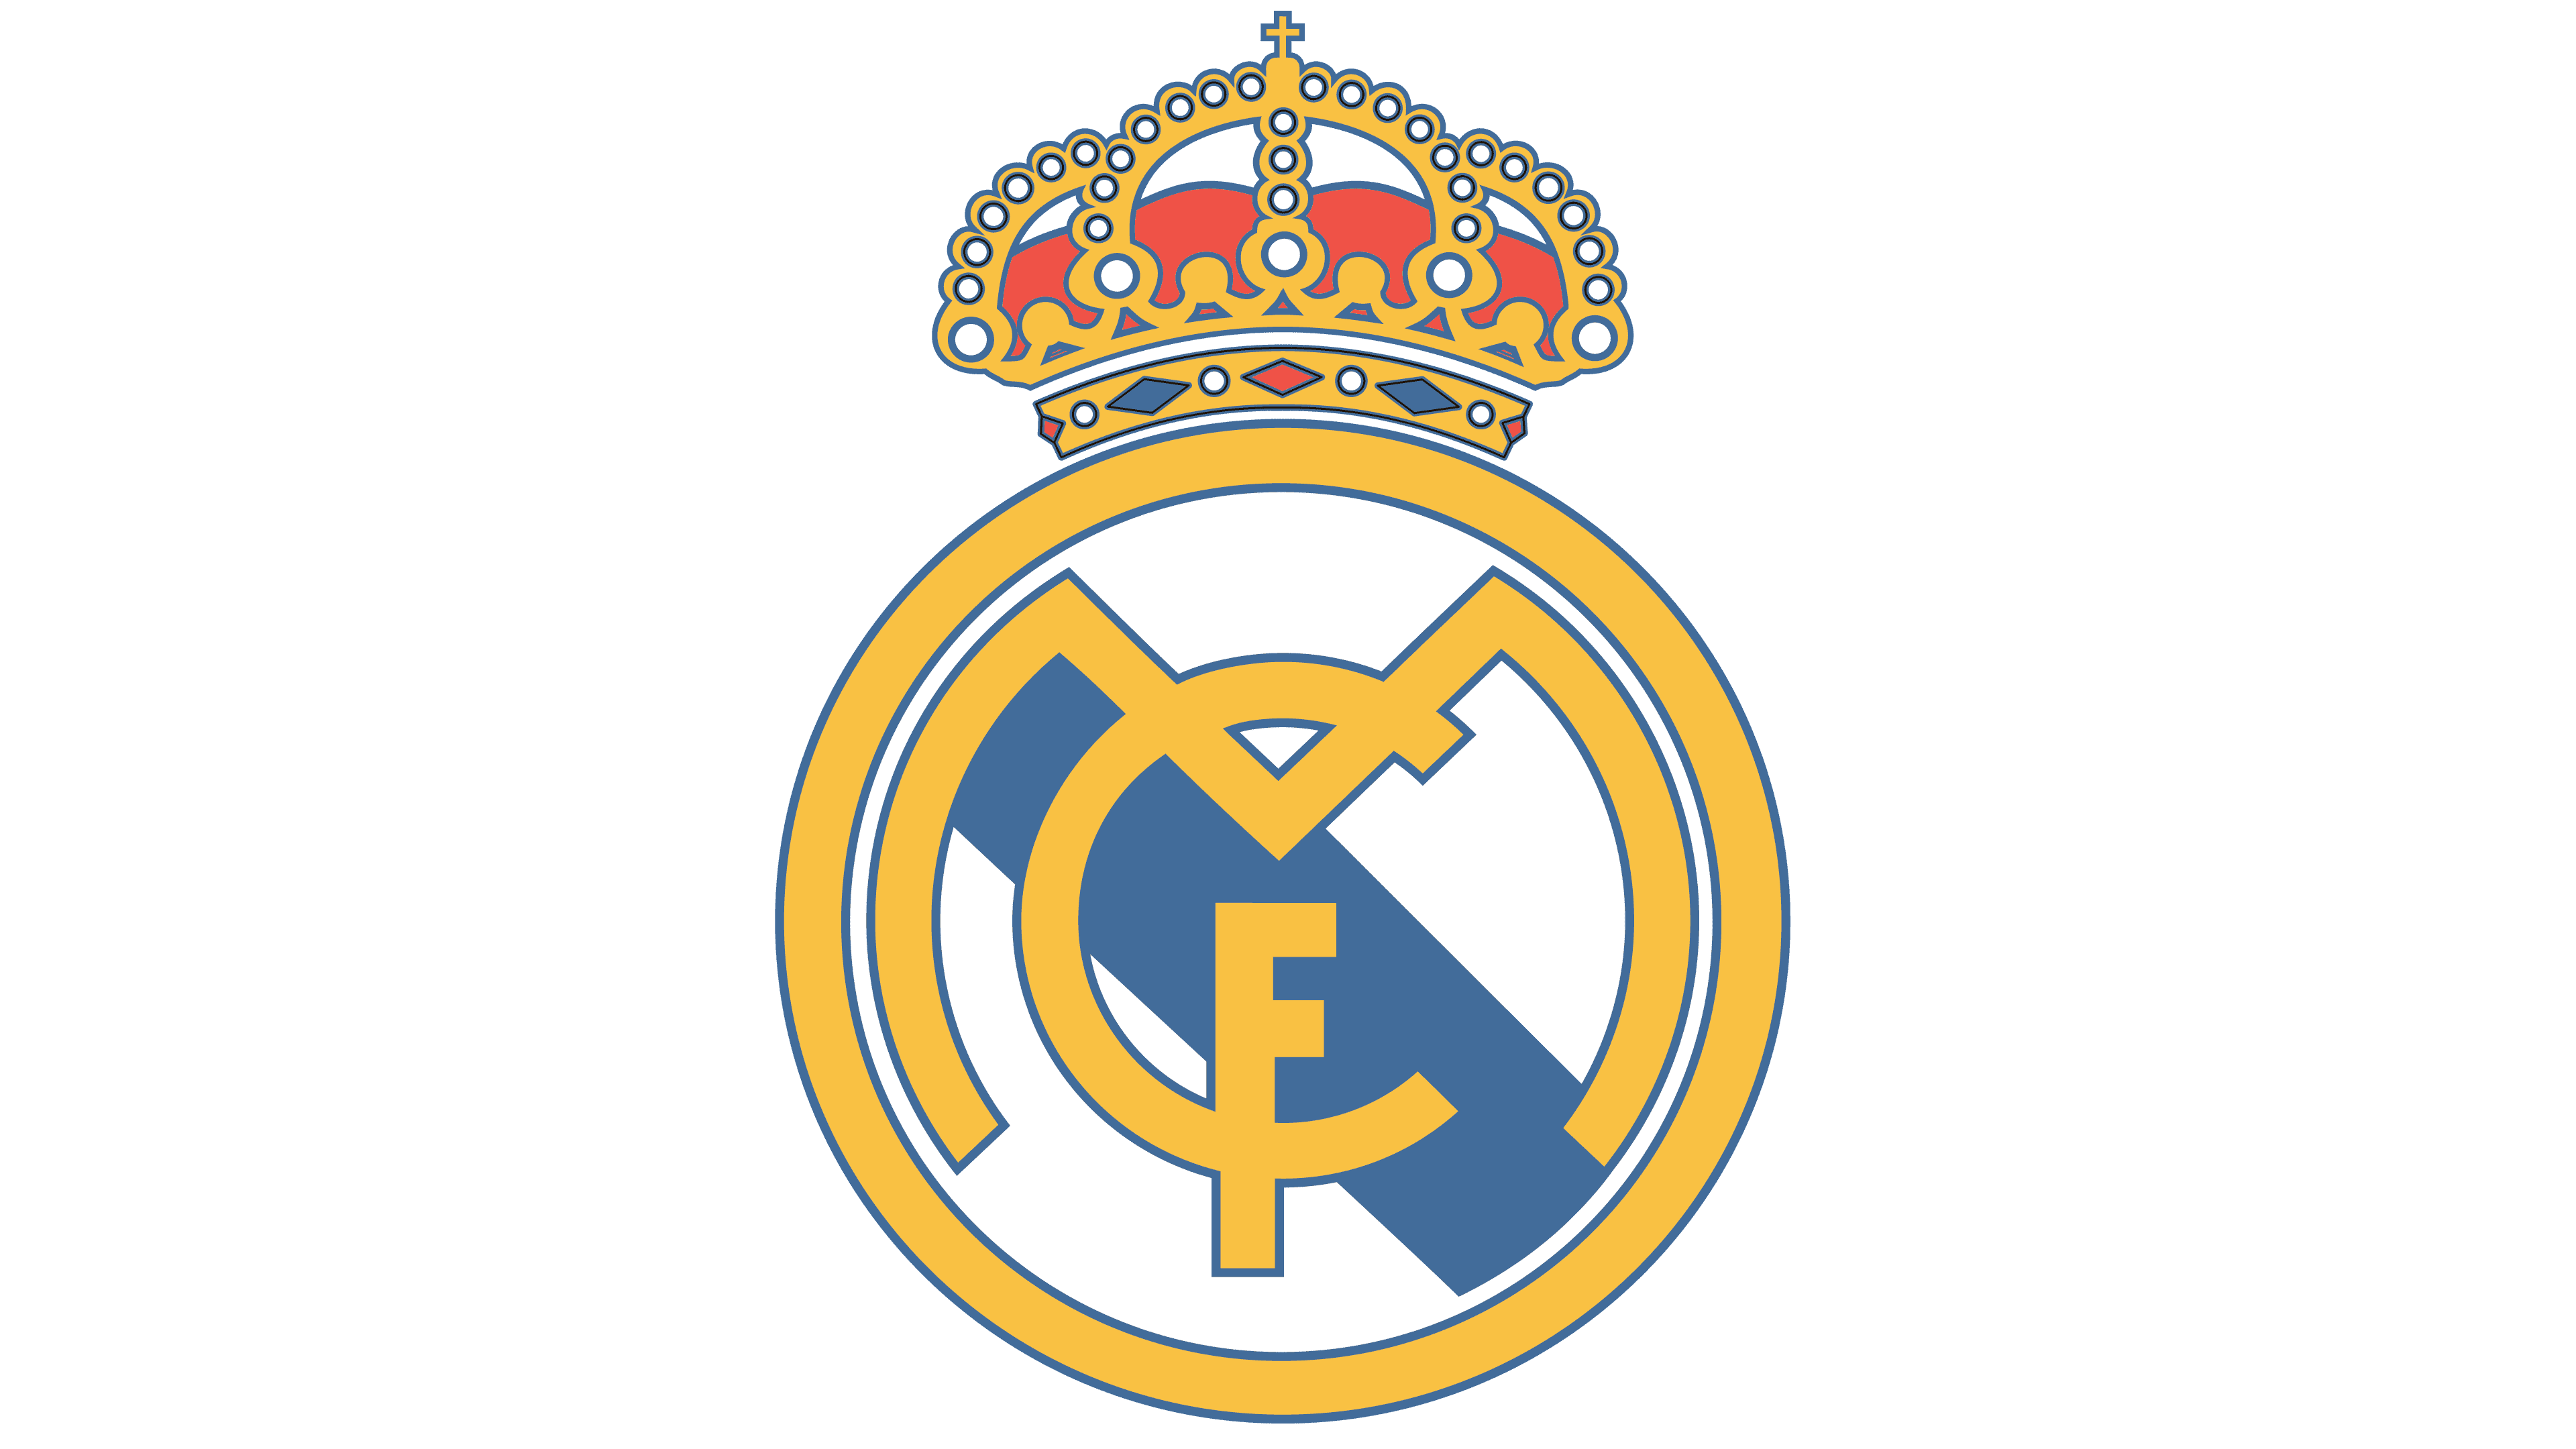 Real Sociedad Vs Real Madrid Football Live Stream 2024: La Liga - Matchday 33